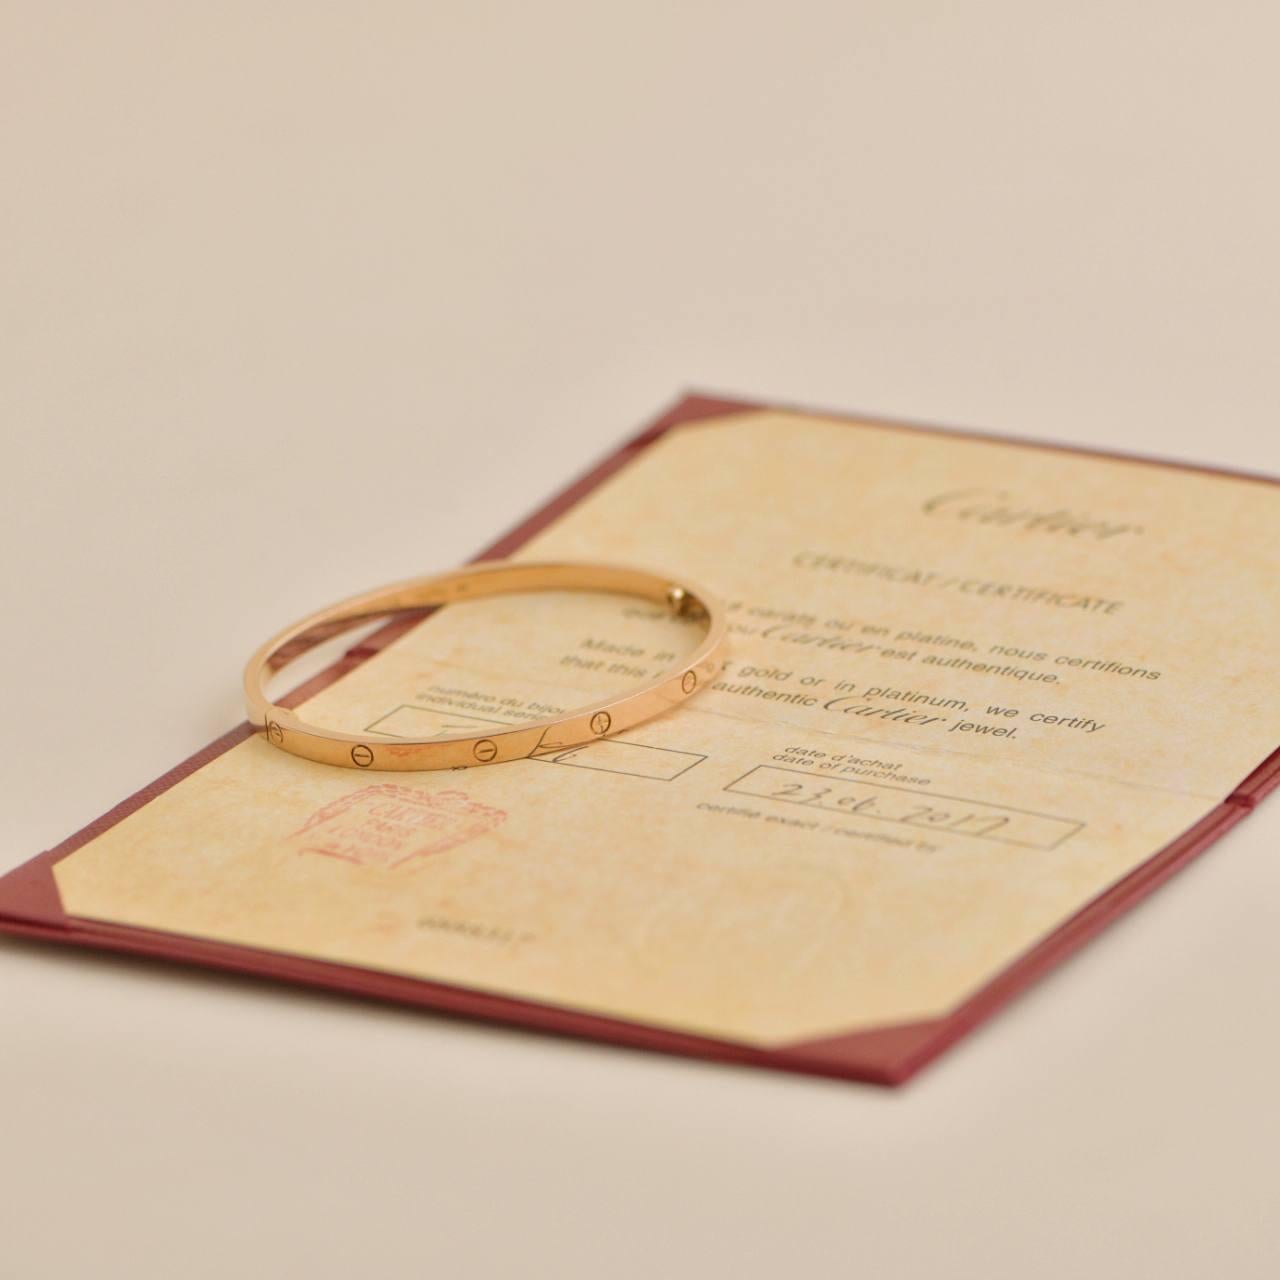 Men's Cartier Love Bracelet Small Model 18k Rose Gold Size 17 For Sale